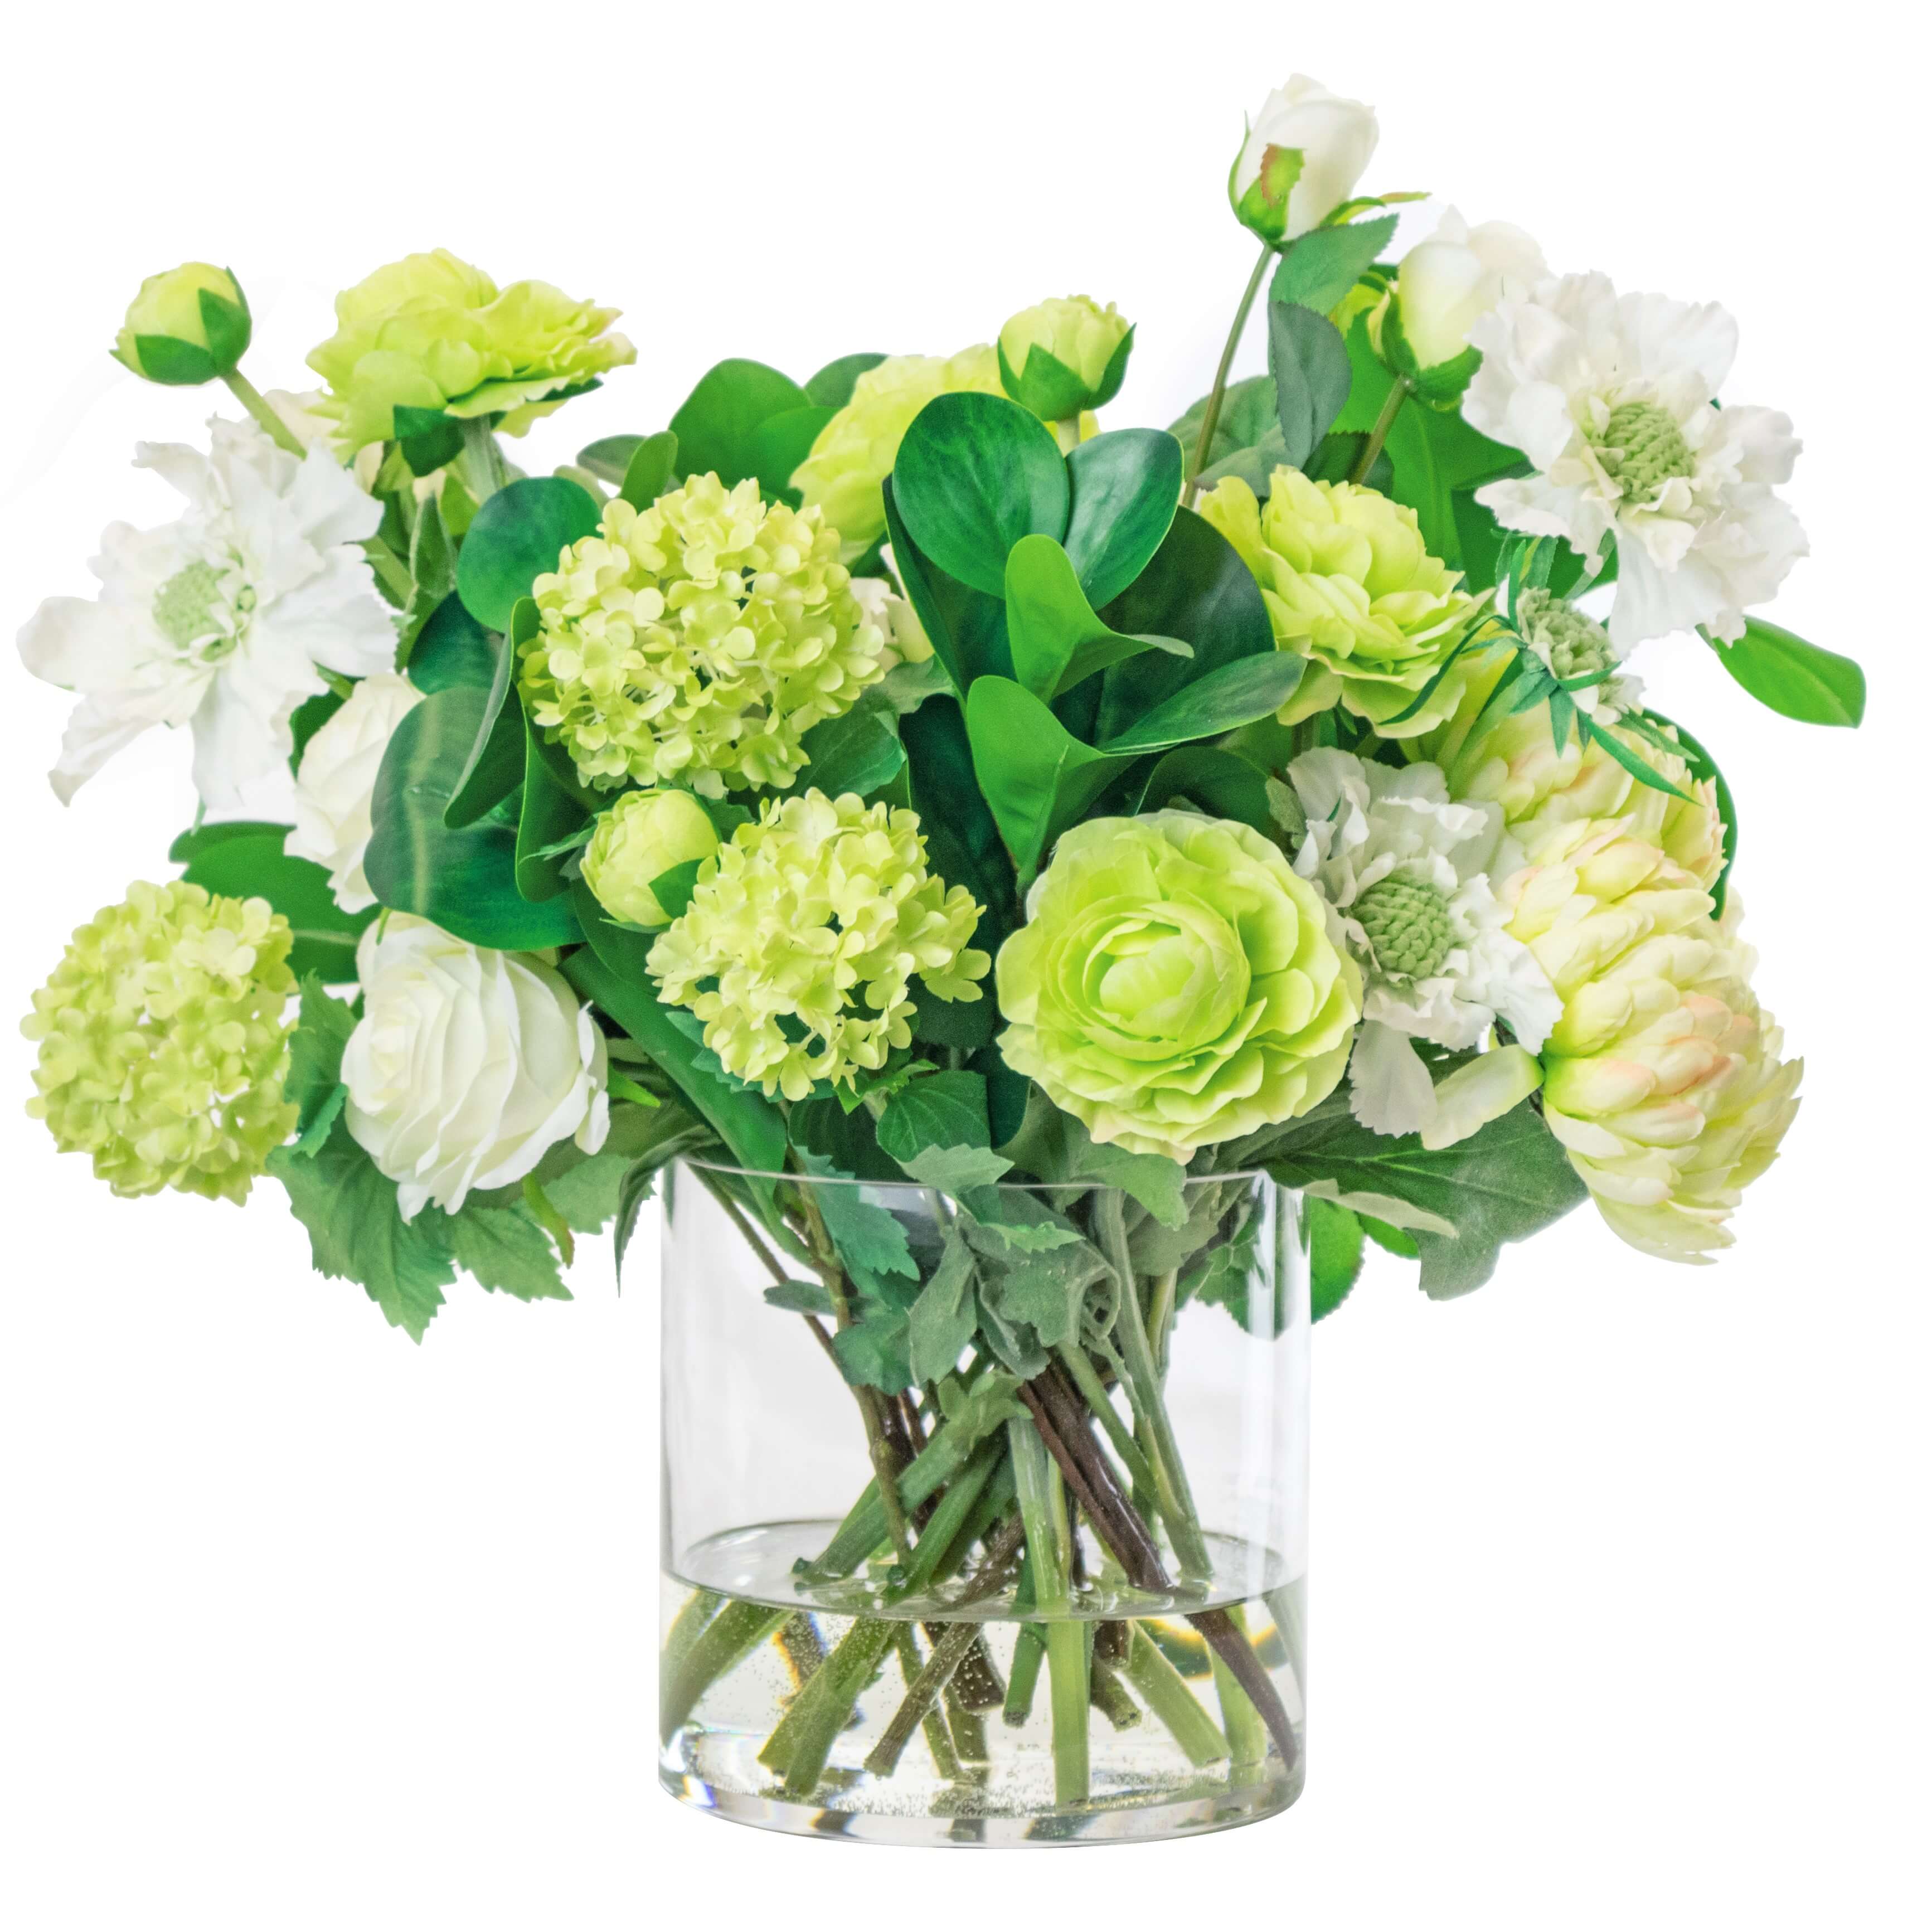 Artificial flowers in vase